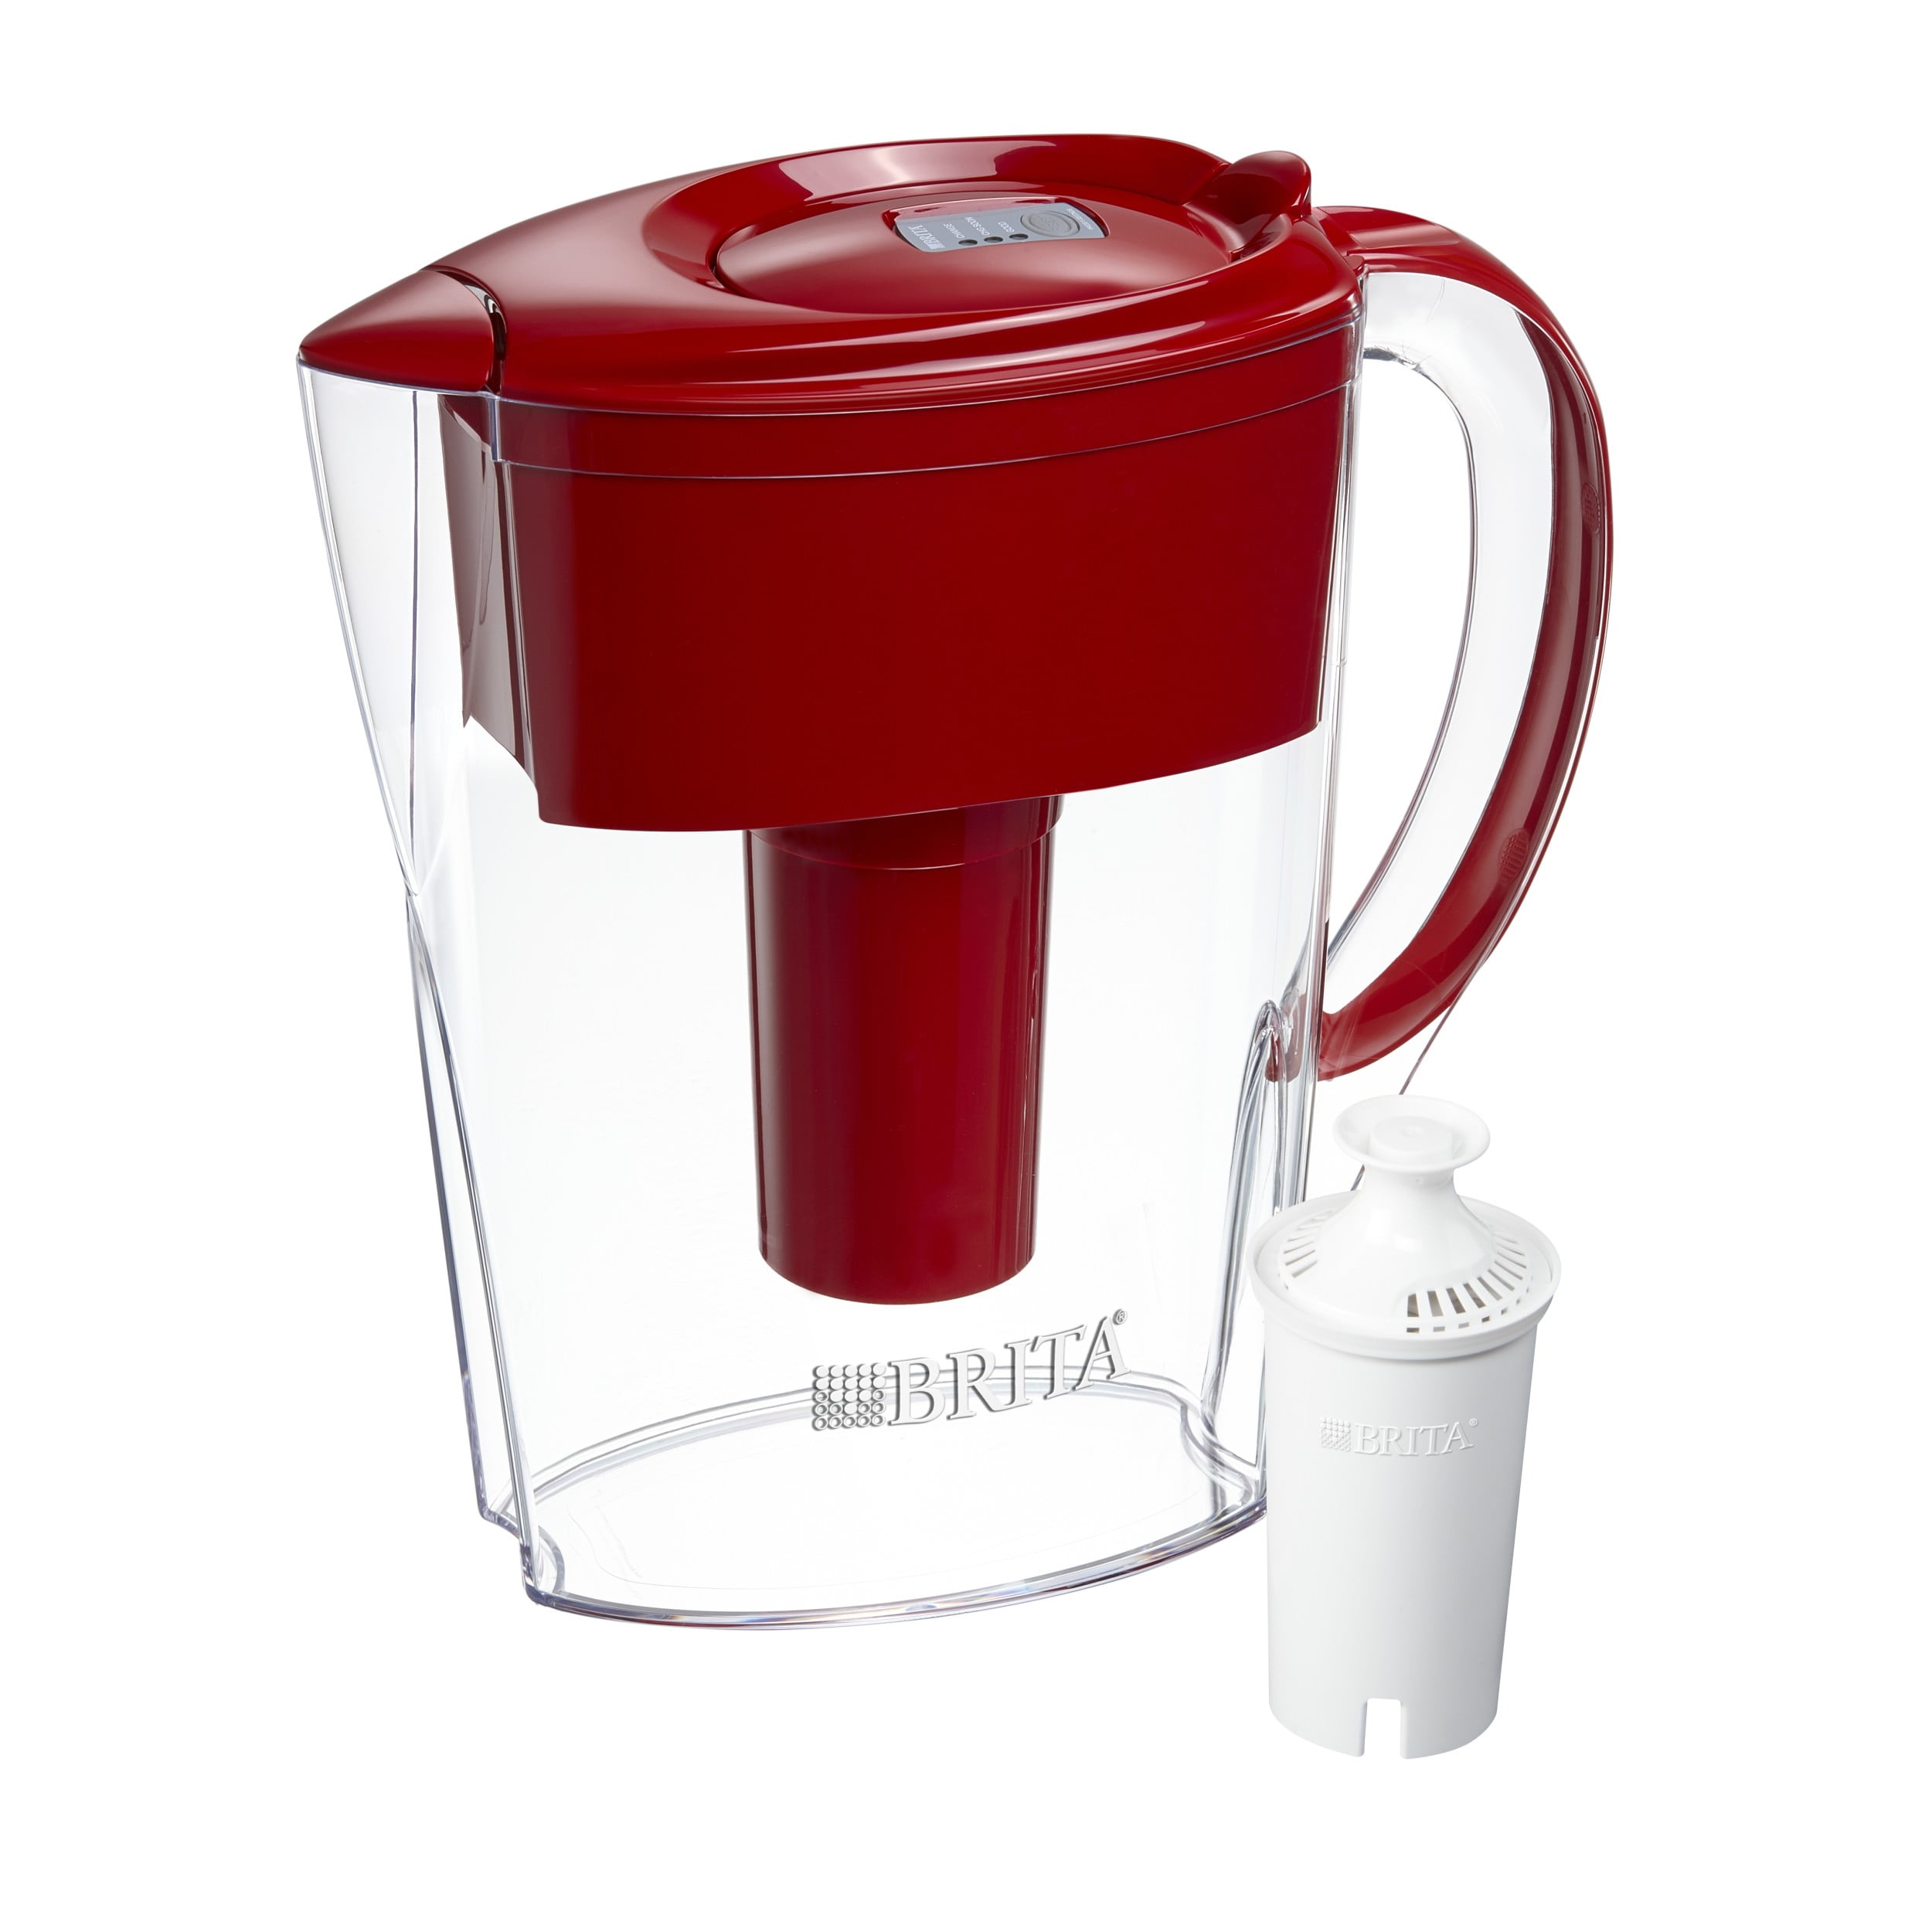 brita-space-saver-water-filter-pitcher-6-cup-red-walmart